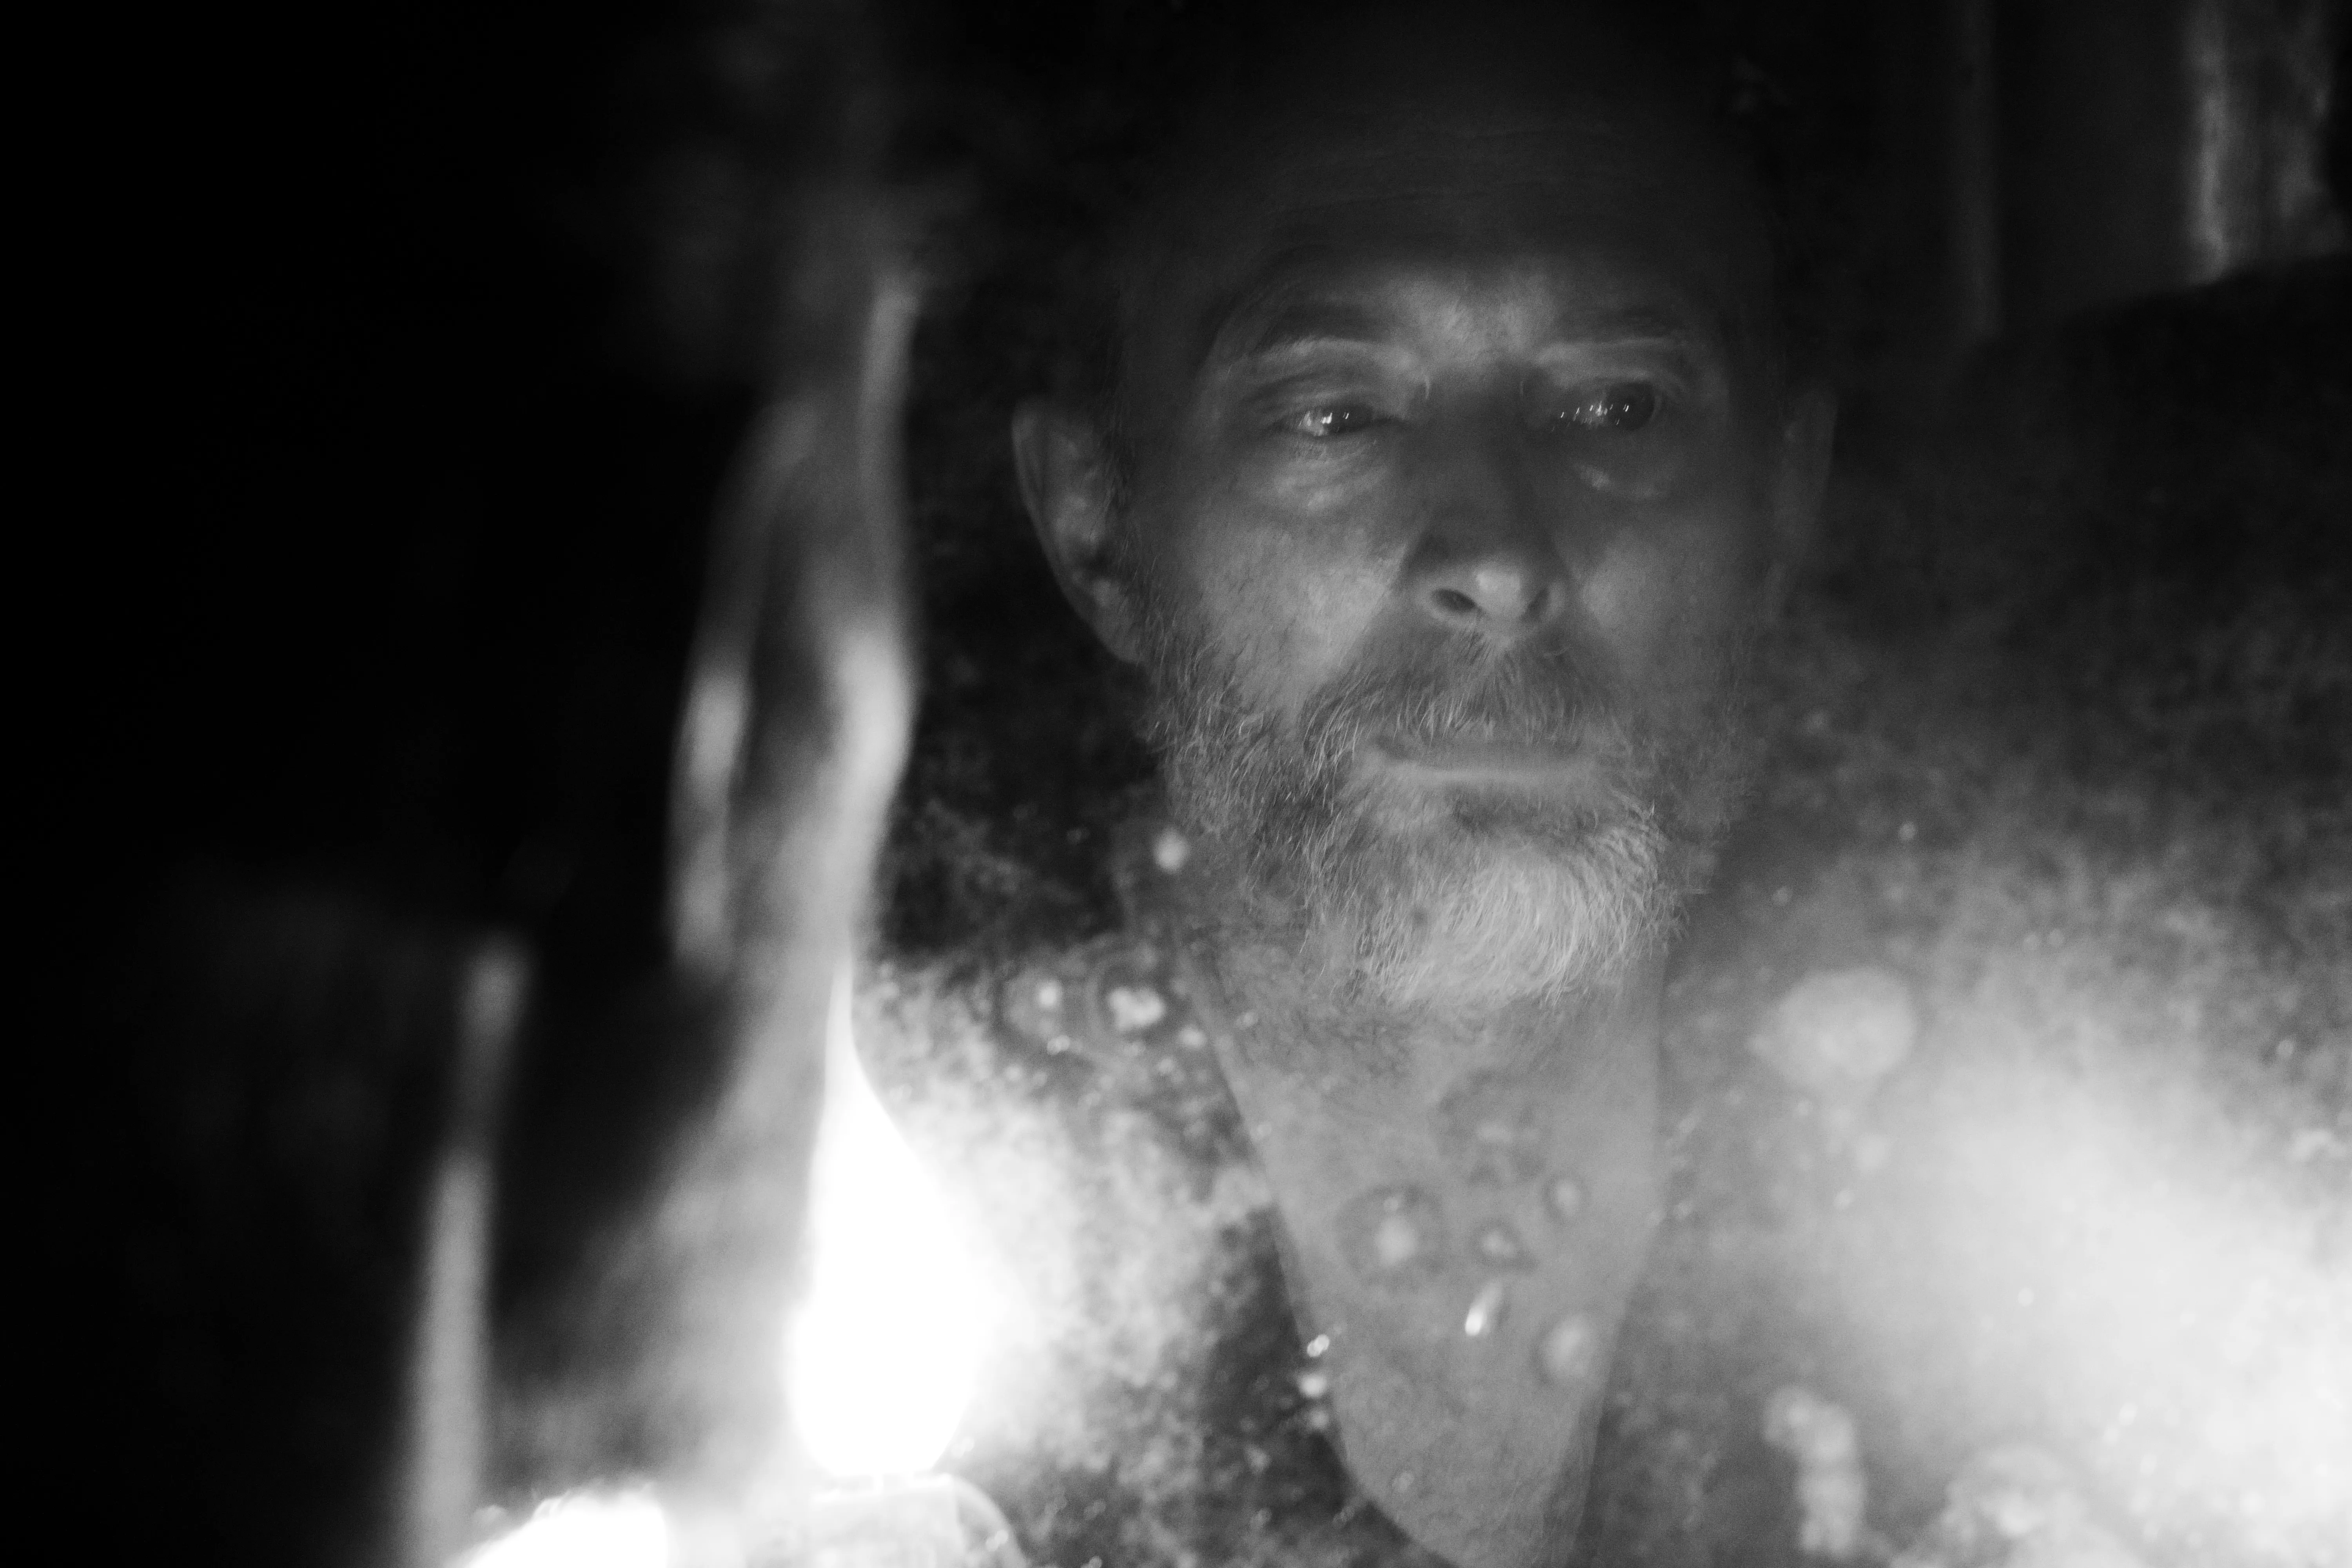 Hør ny, dyster single fra Thom Yorke